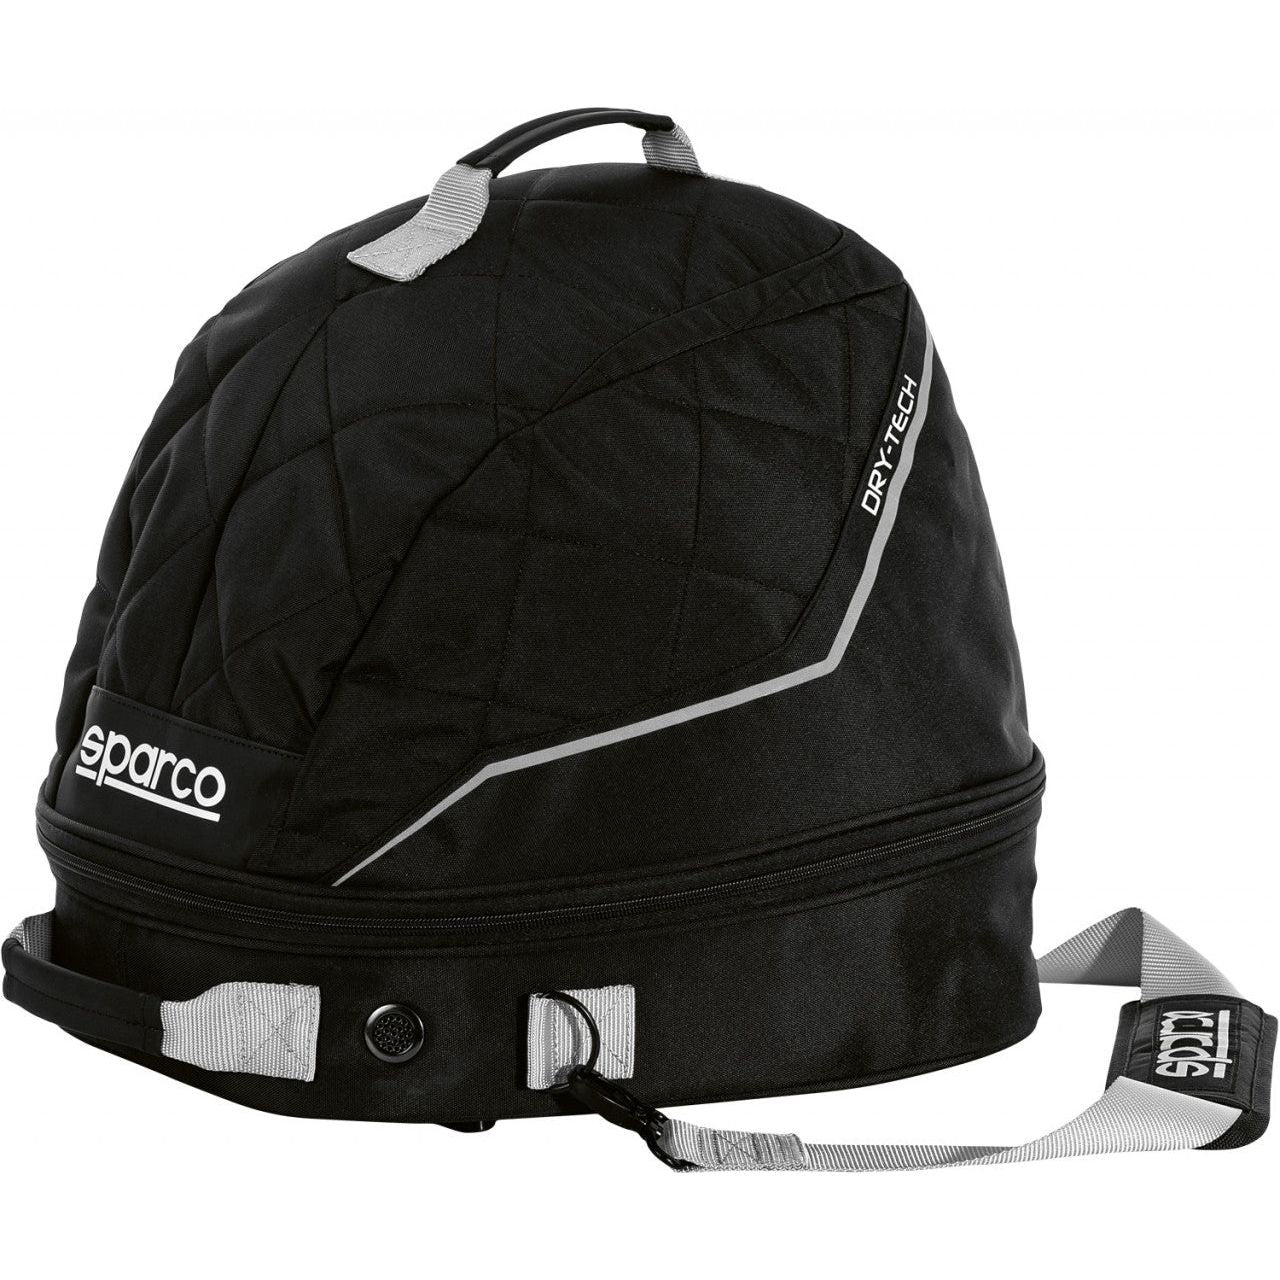 Sparco helmet bag Dry Tech